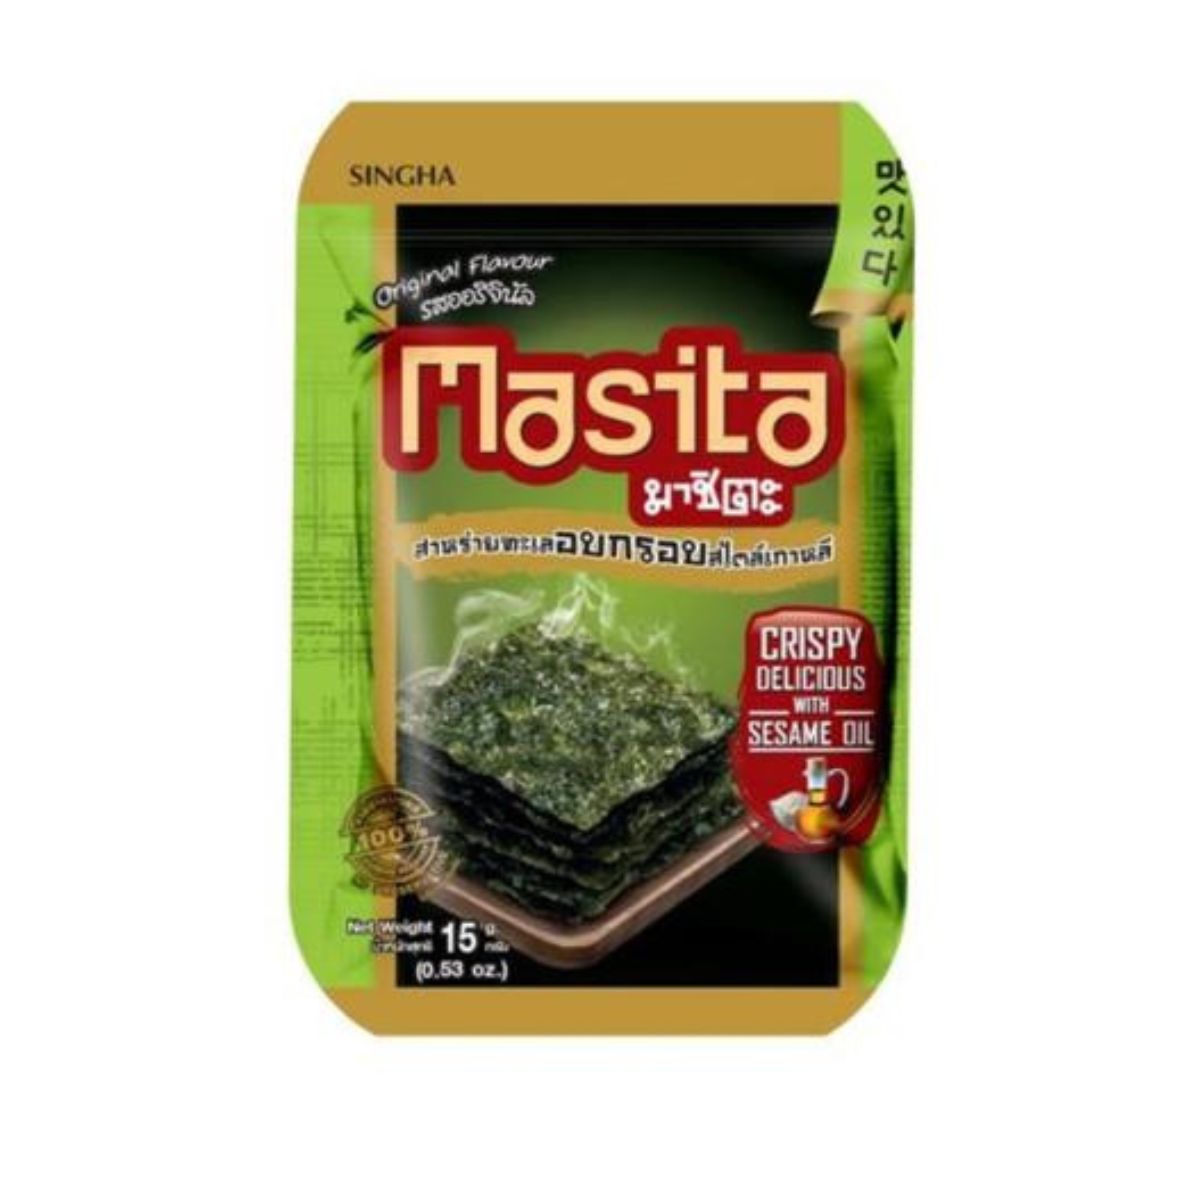 Masita - Korean Style Roasted Seaweed - Original Flavour - 15g